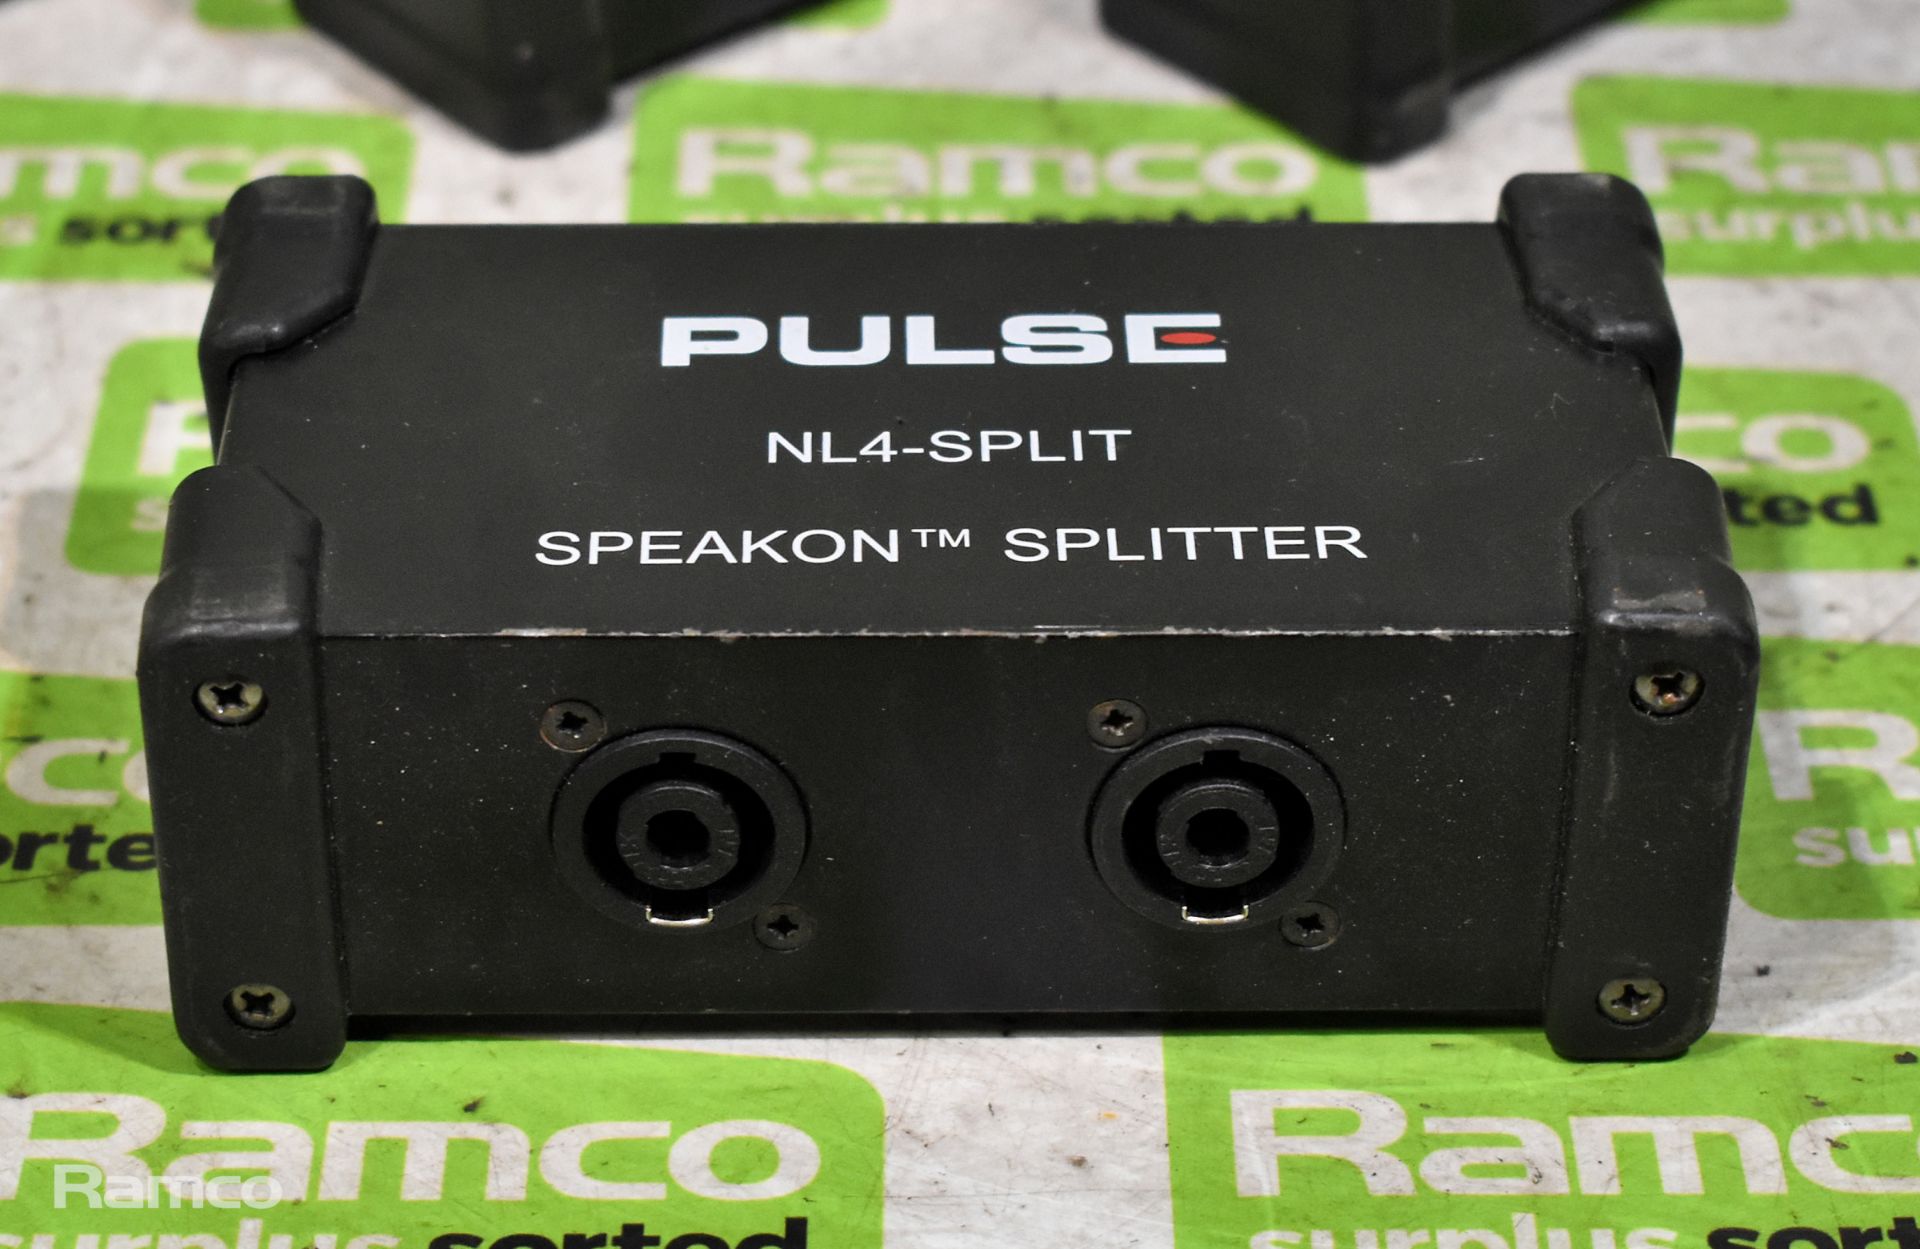 4x Pulse NL4-SPLIT Speakon splitter boxes - L 150 x W 80 x H 50mm - Image 3 of 3